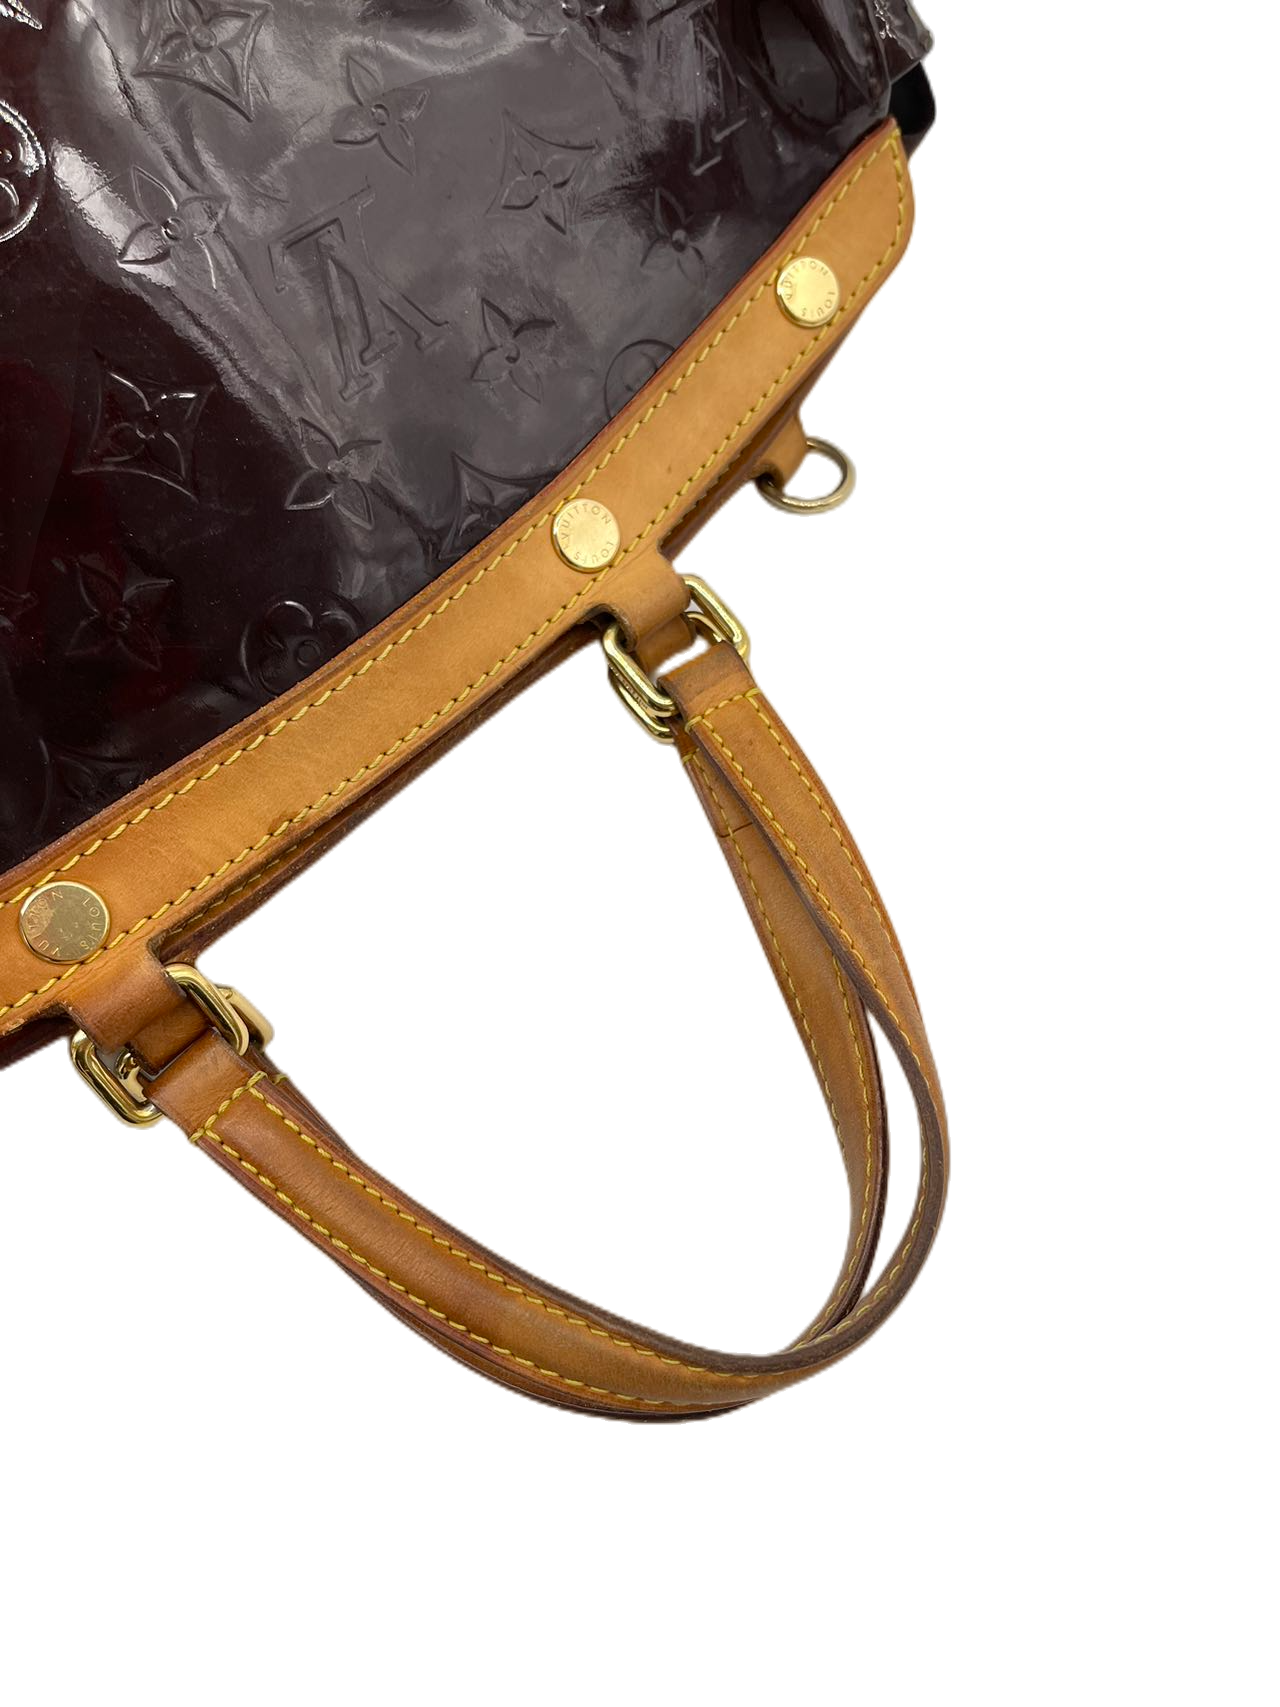 Preloved Louis Vuitton Patent Leather Brea Satchel